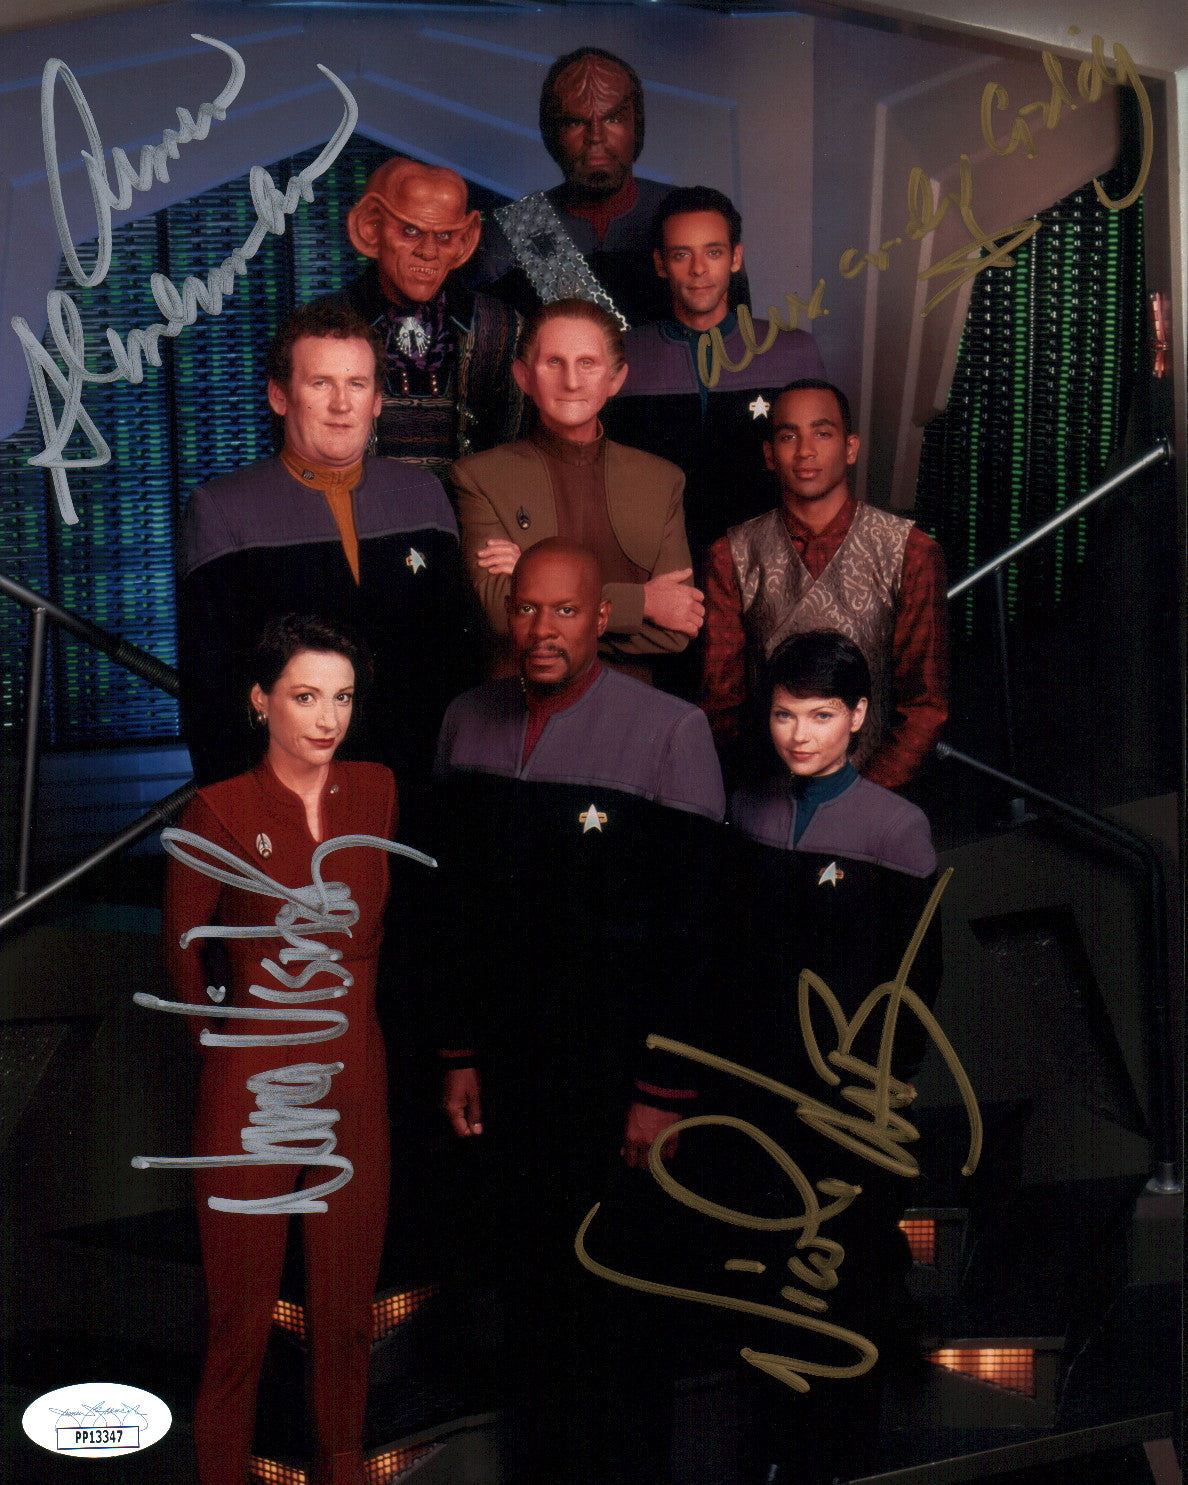 Star Trek: Deep Space Nine 8x10 Photo Cast x4 Signed De Boer, Shimerman, Siddig, Visitor JSA Certified Autograph